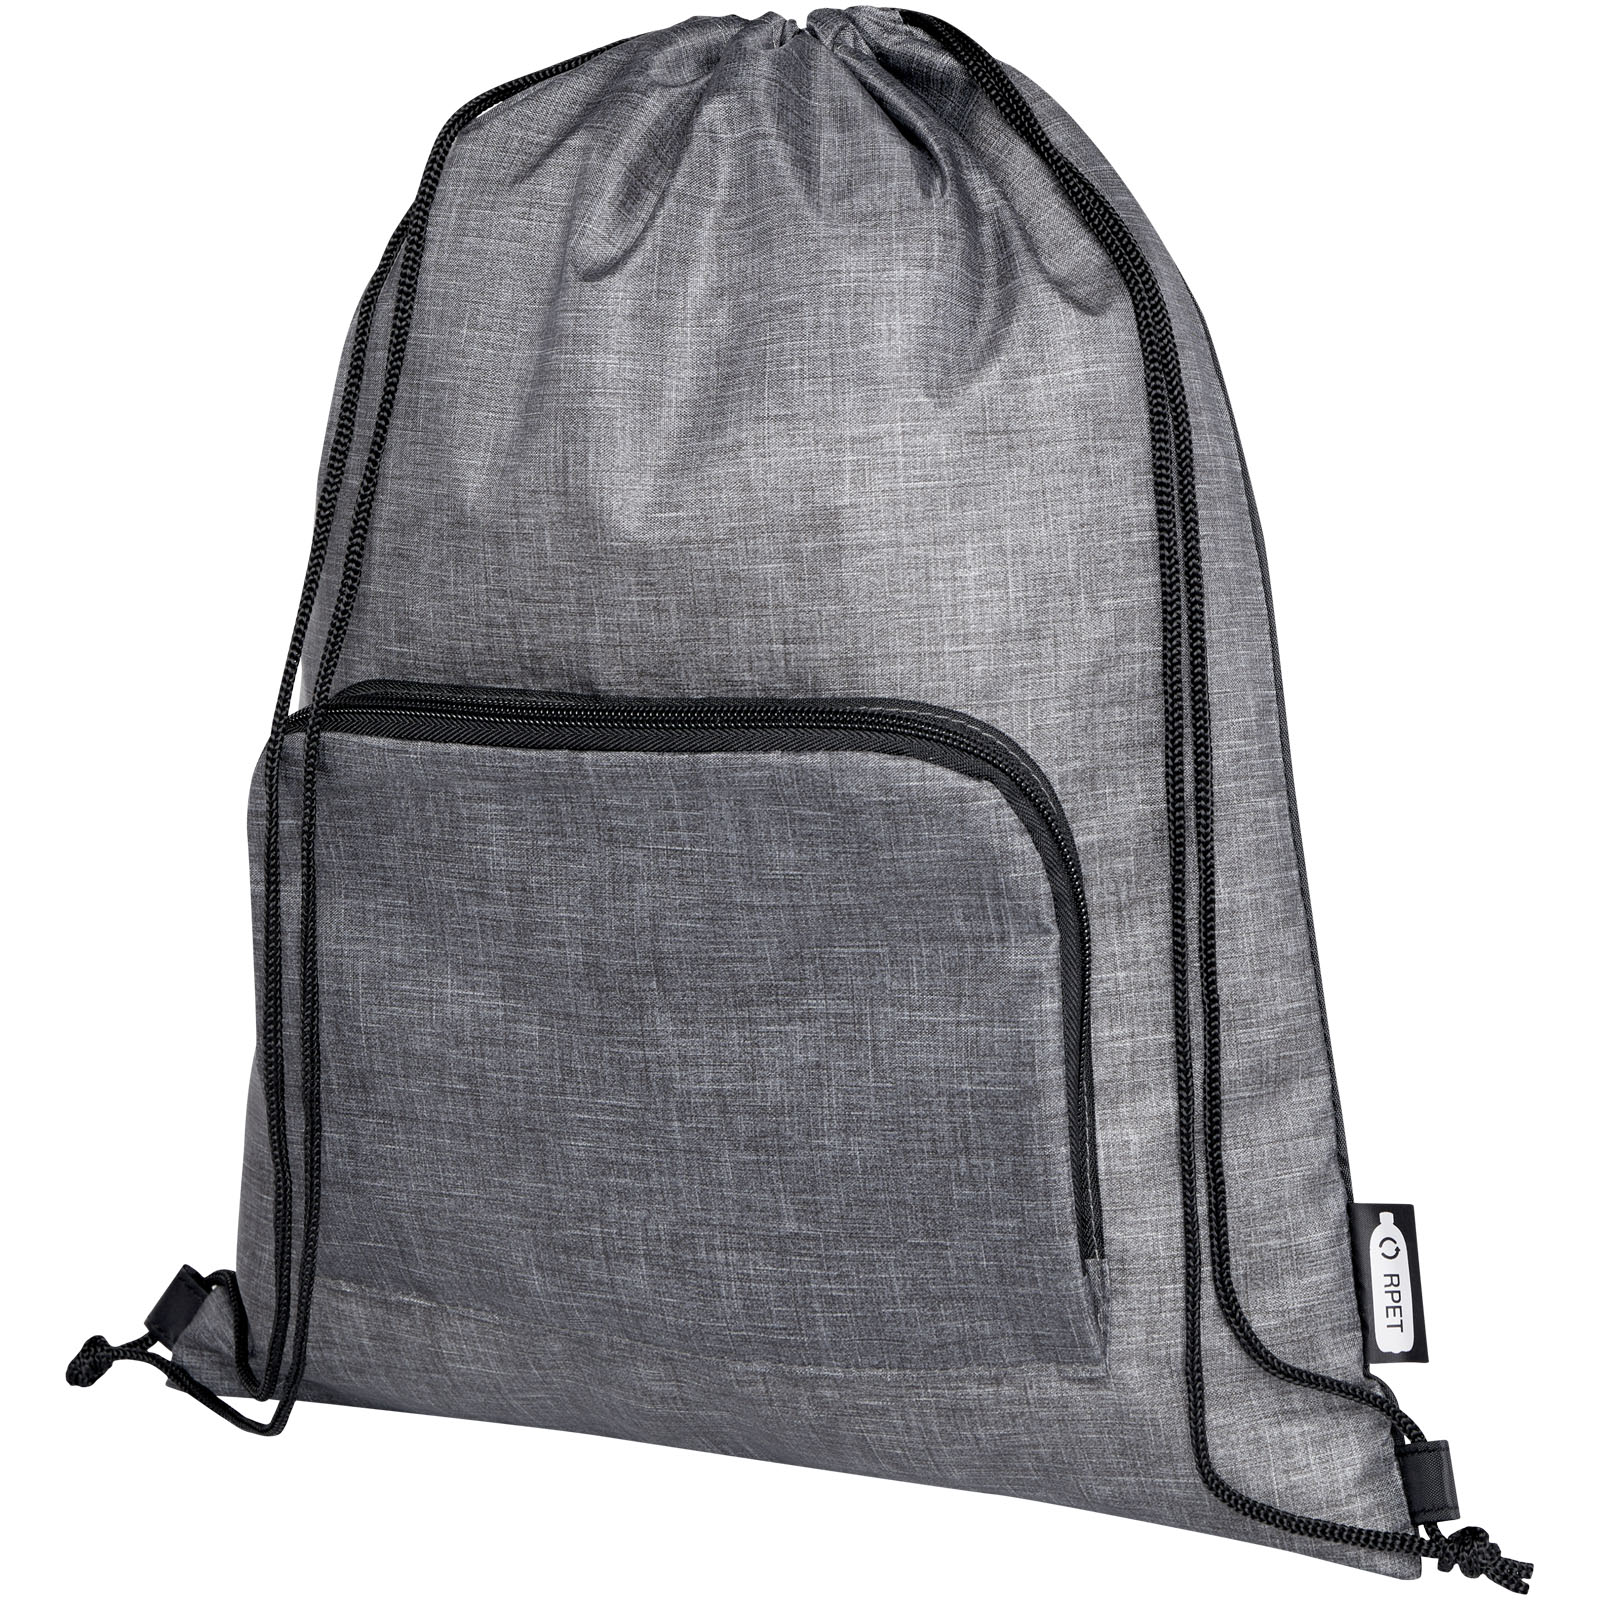 Advertising Drawstring Bags - Ash recycled foldable drawstring bag 7L - 0